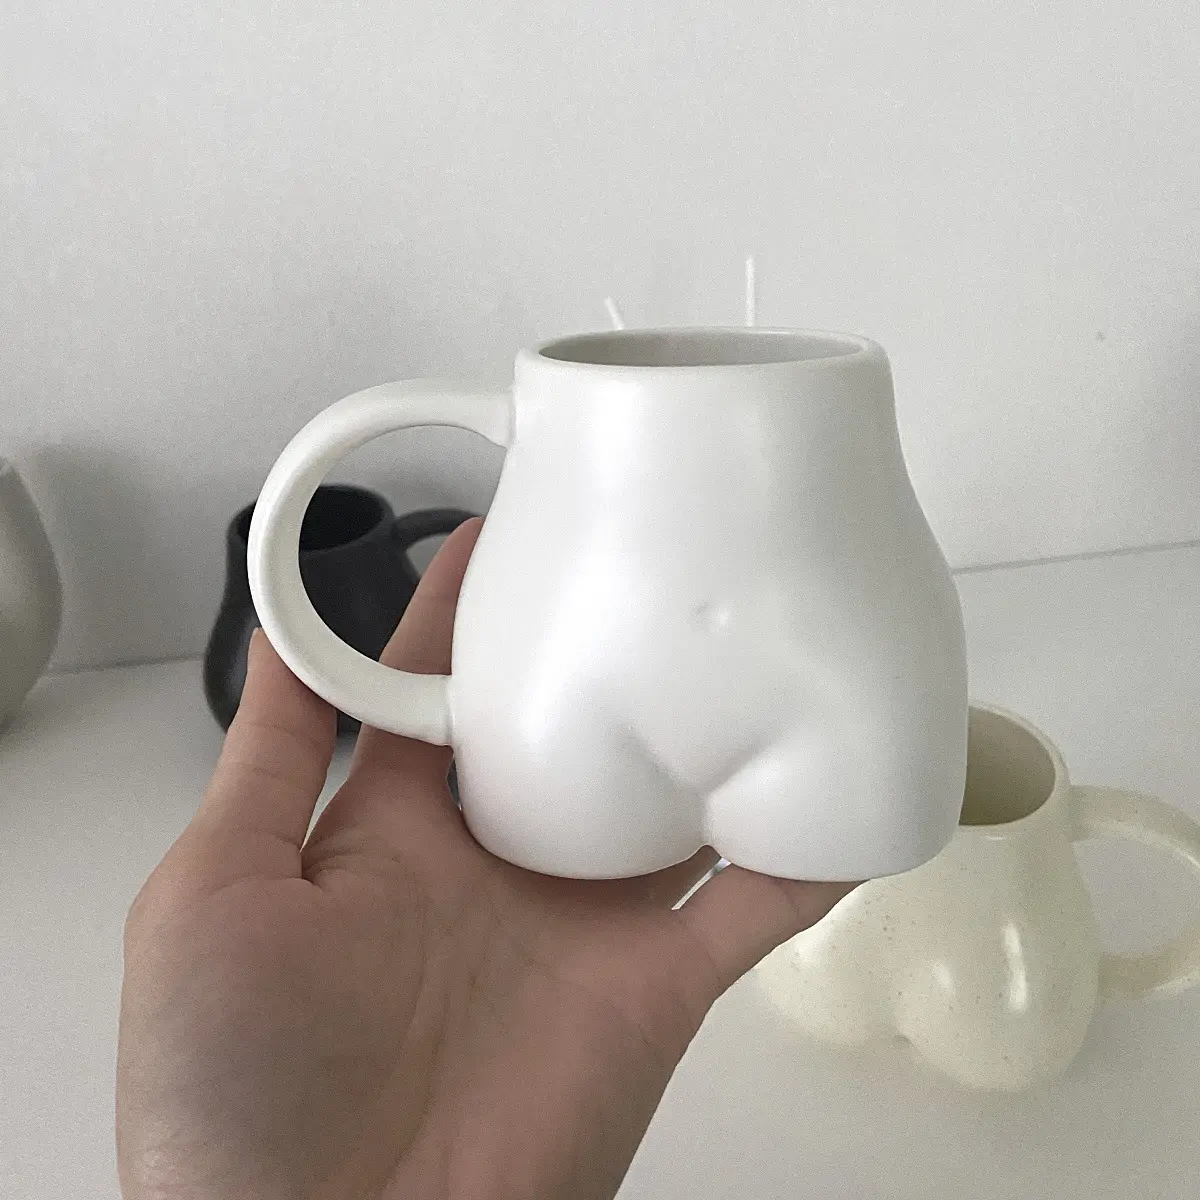 Newest fashion design creative butt ceramic mug Ass coffee cup porcelain mug cute solid color desktop decoration